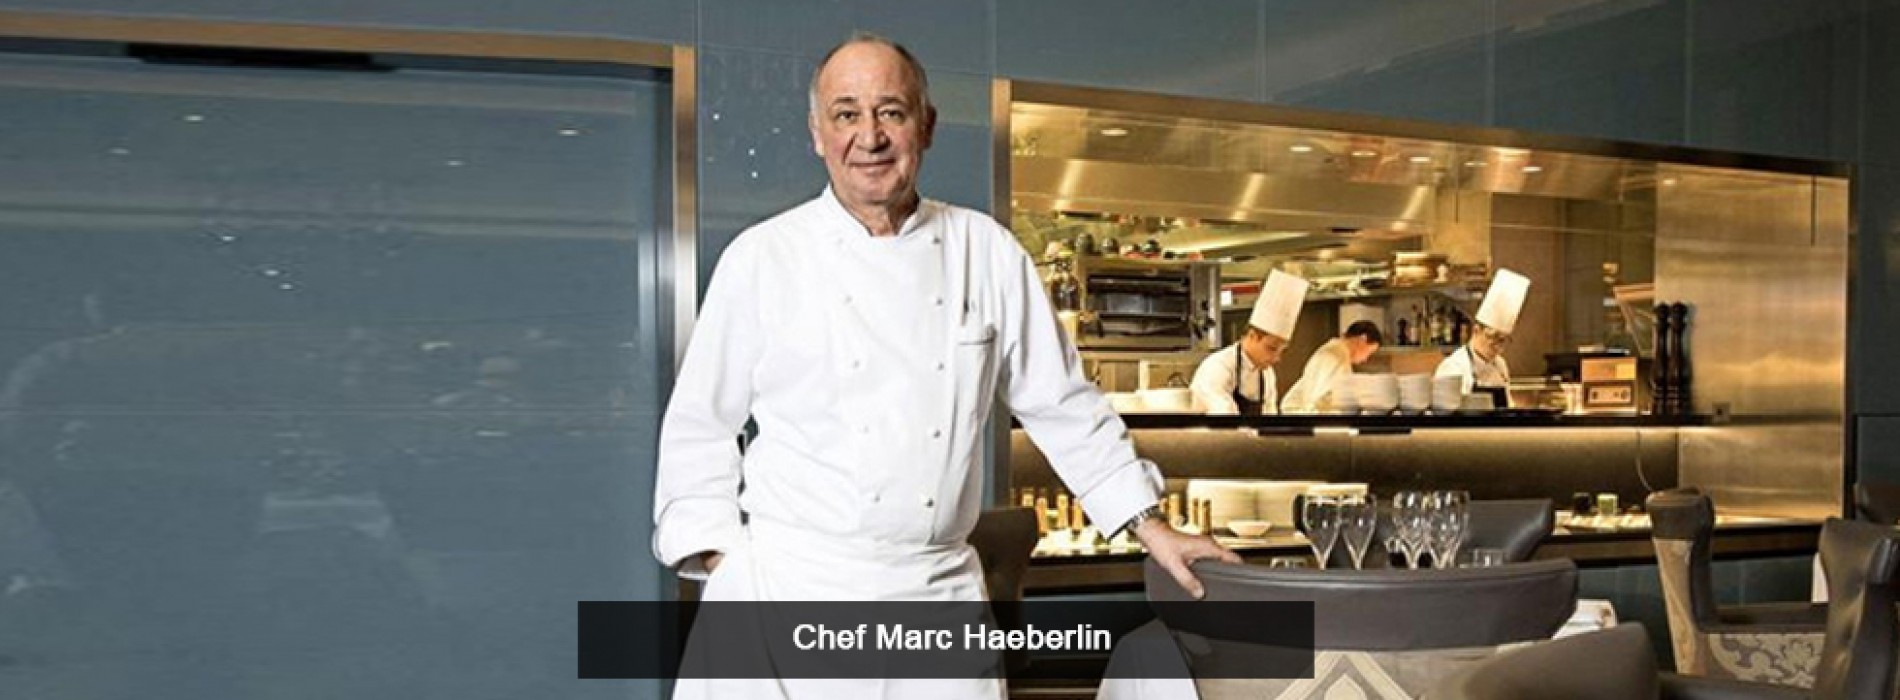 Celebrated chef Marc Haeberlin joins luxury Swiss resort Bürgenstock